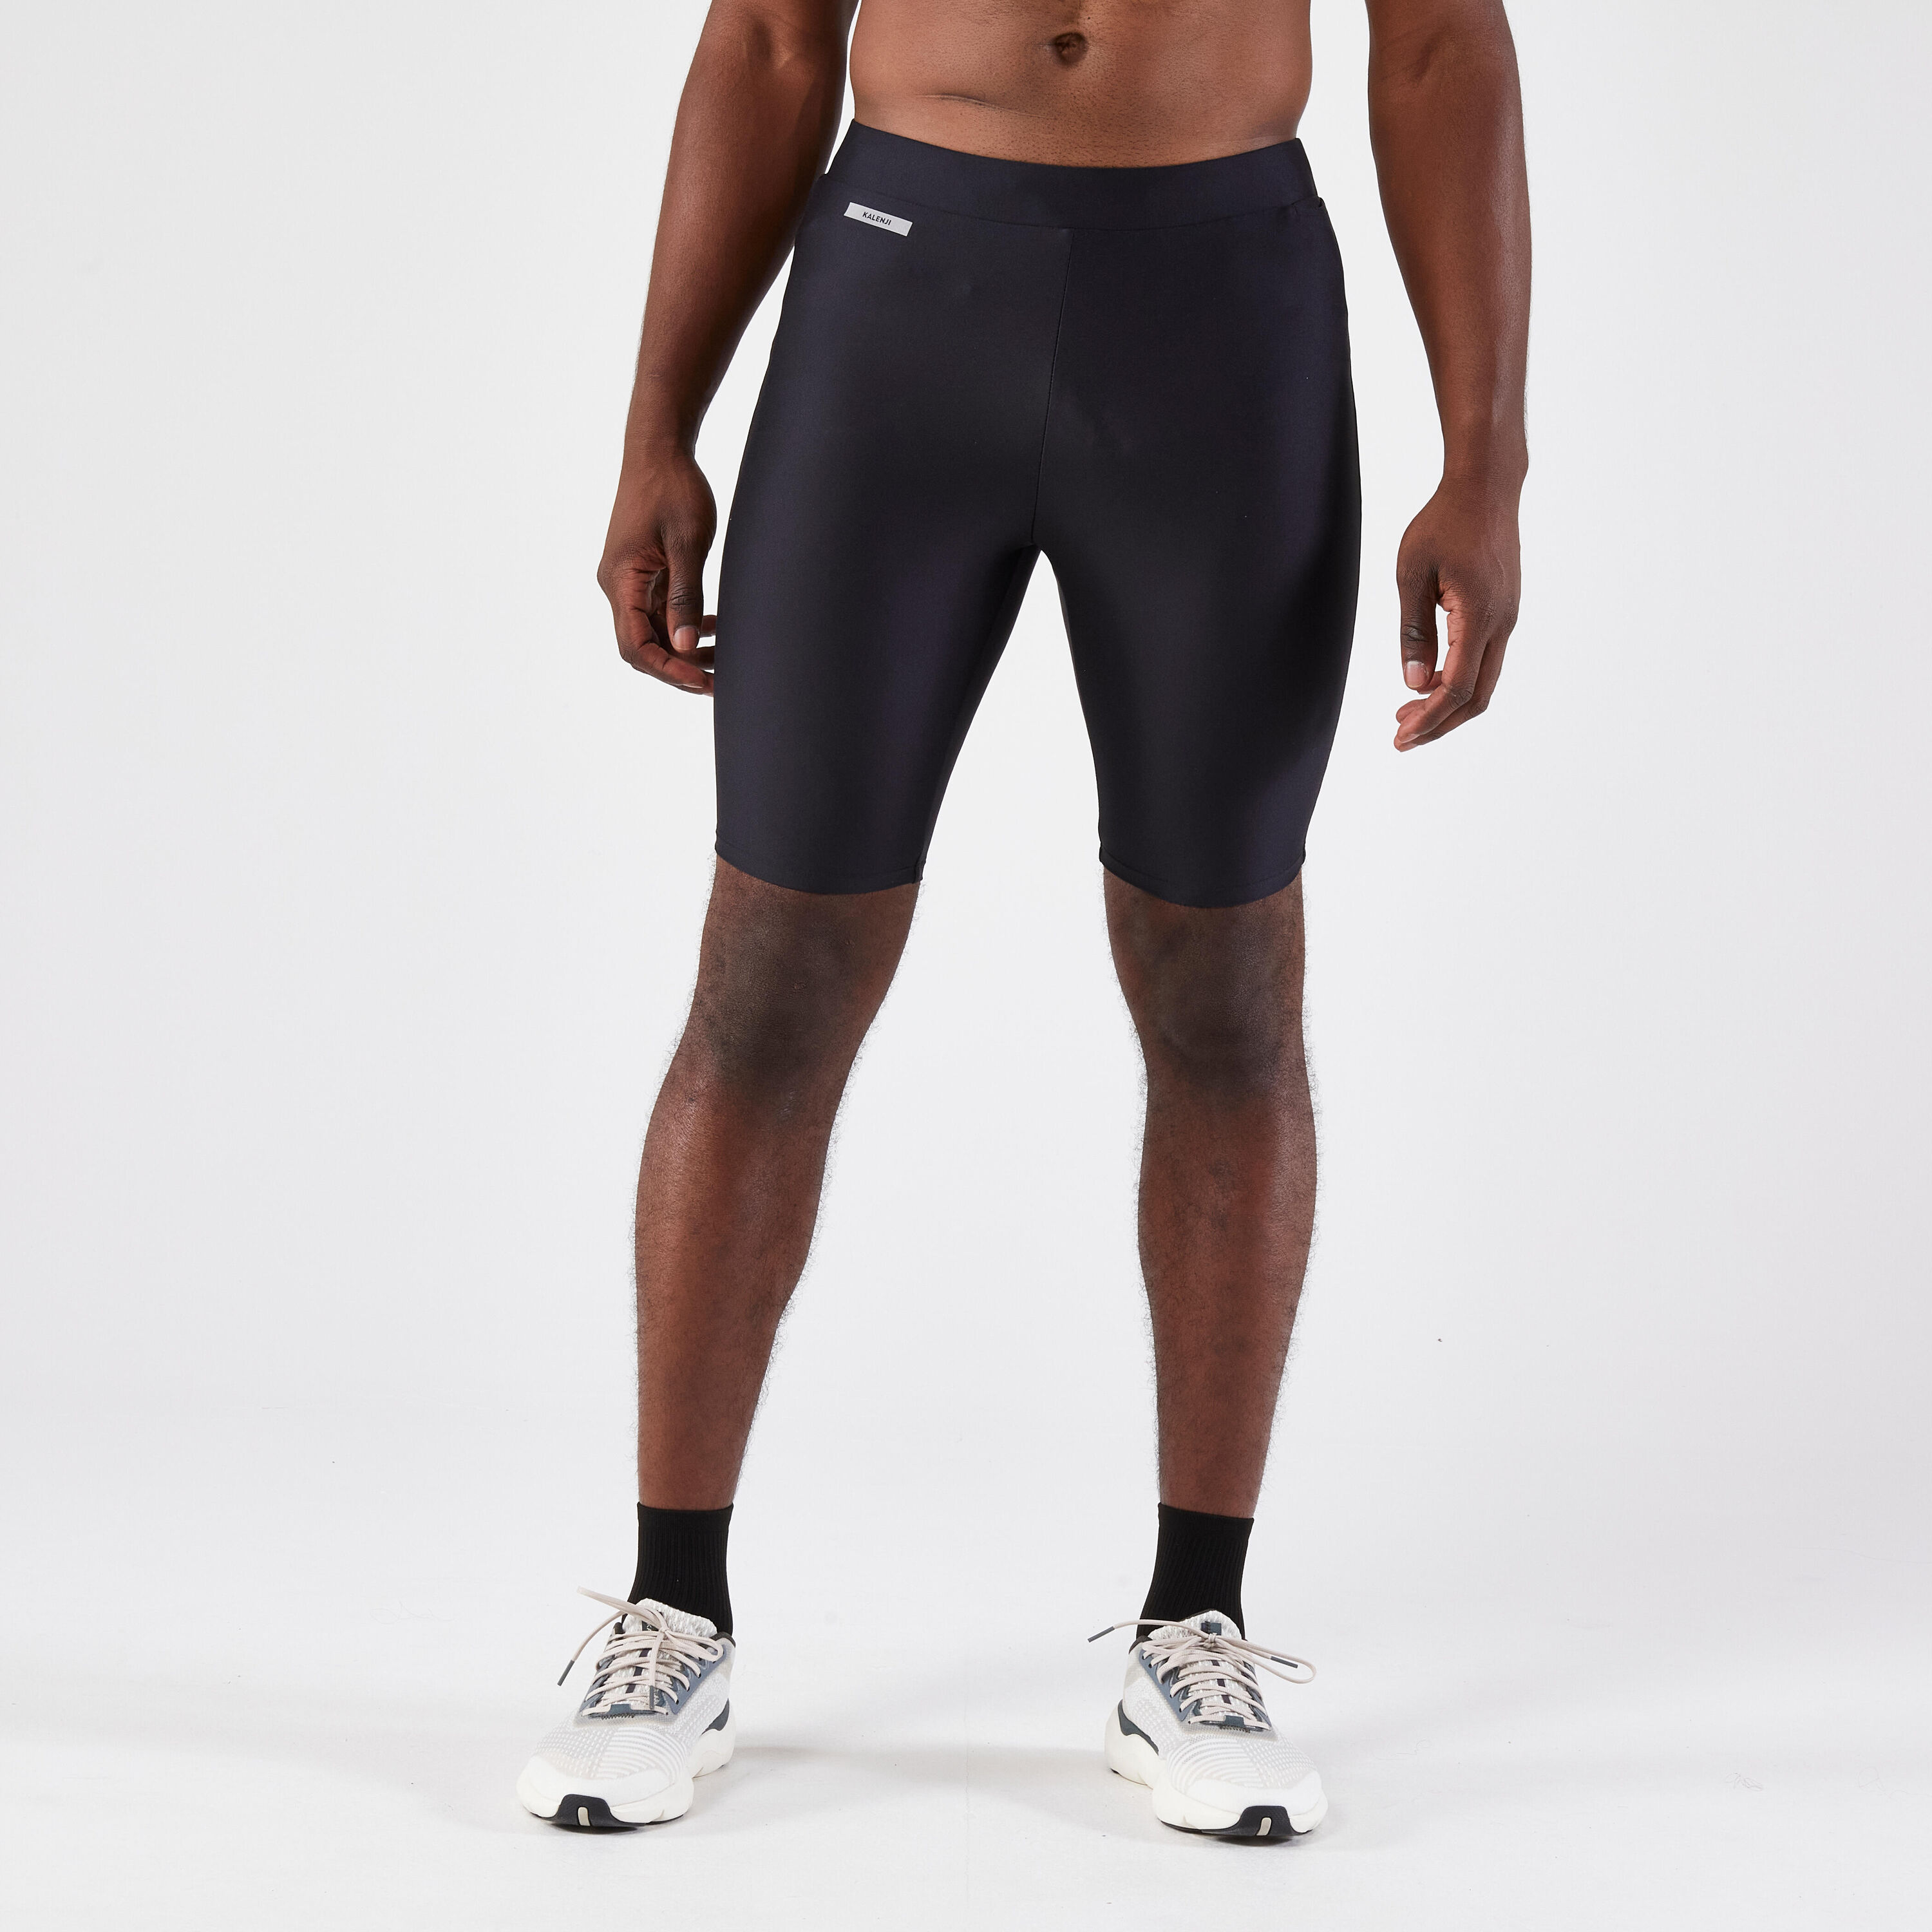 Men's Under Armour Black Spandex Half Tights Compression Shorts Small